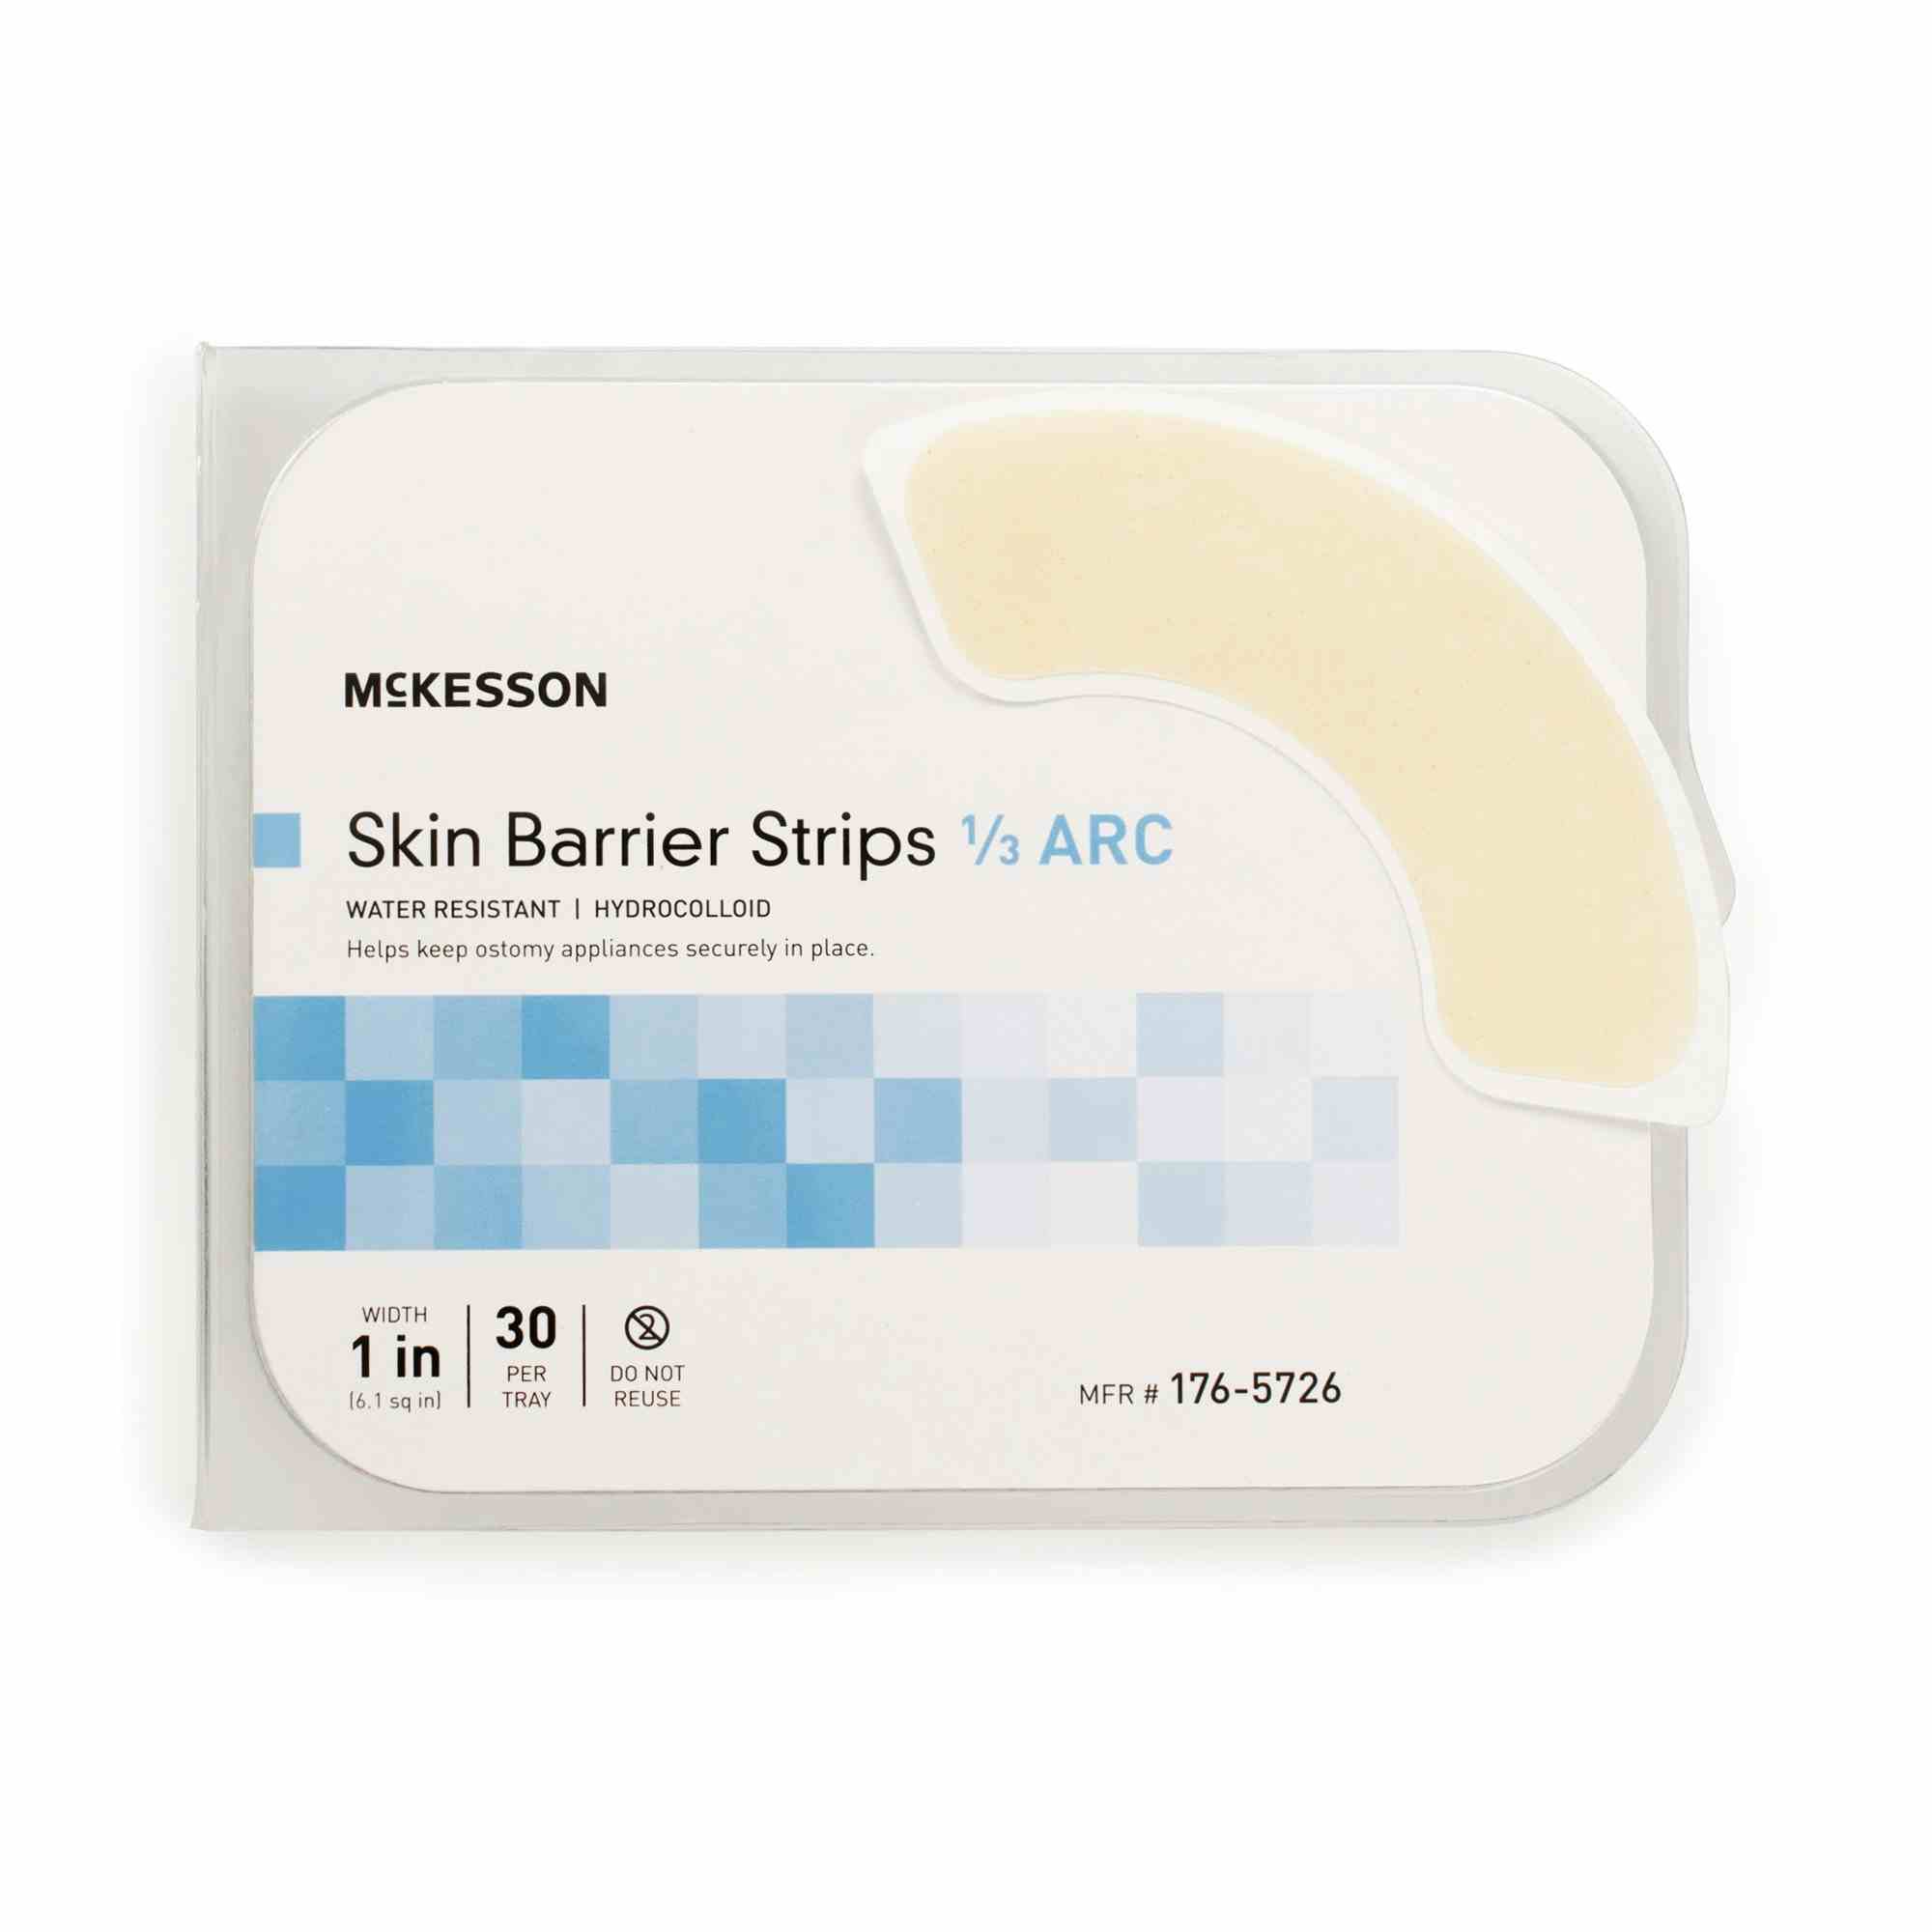 McKesson Skin Barrier Strips, 1/3 ARC, 176-5726, 1 Each